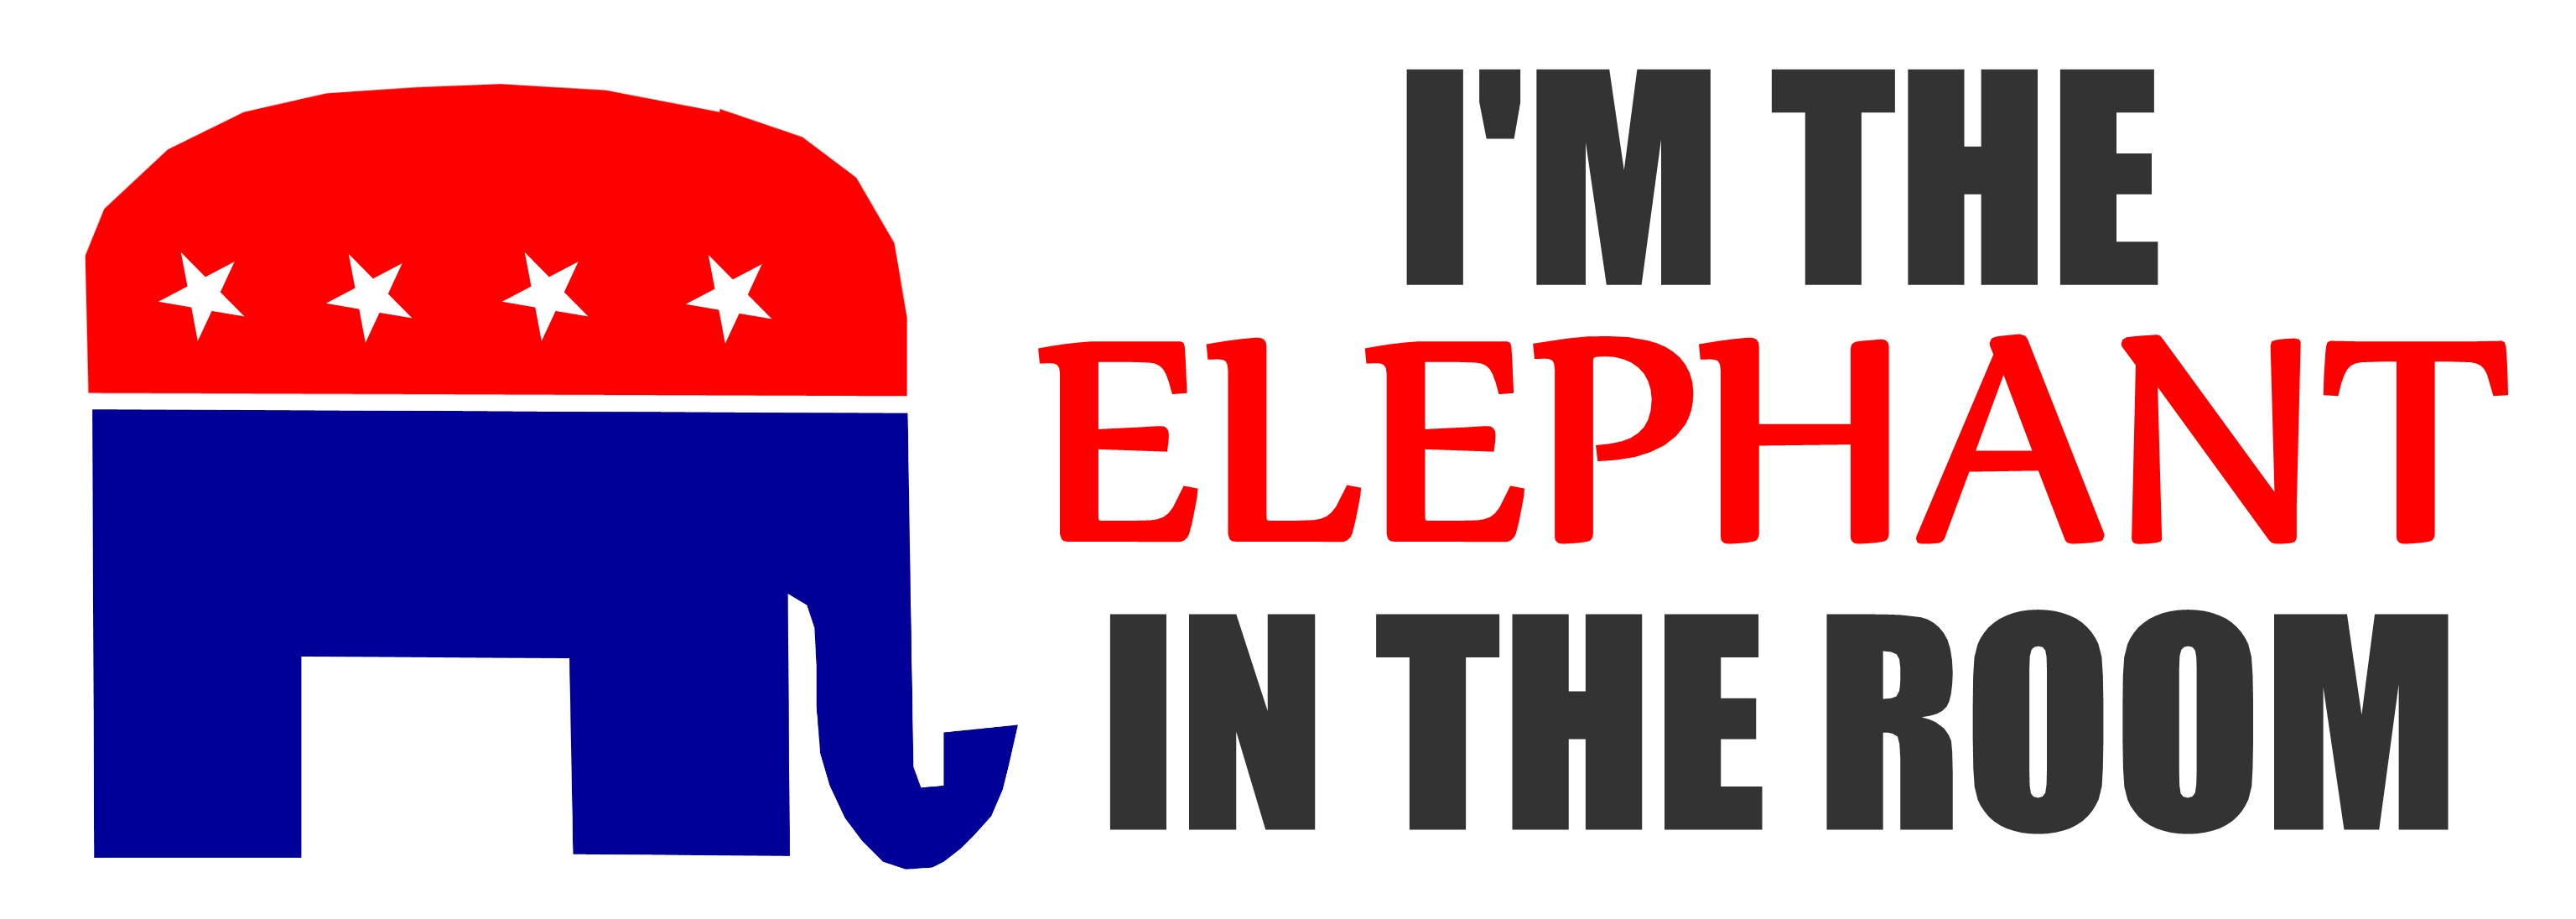 Website Republican Elephant